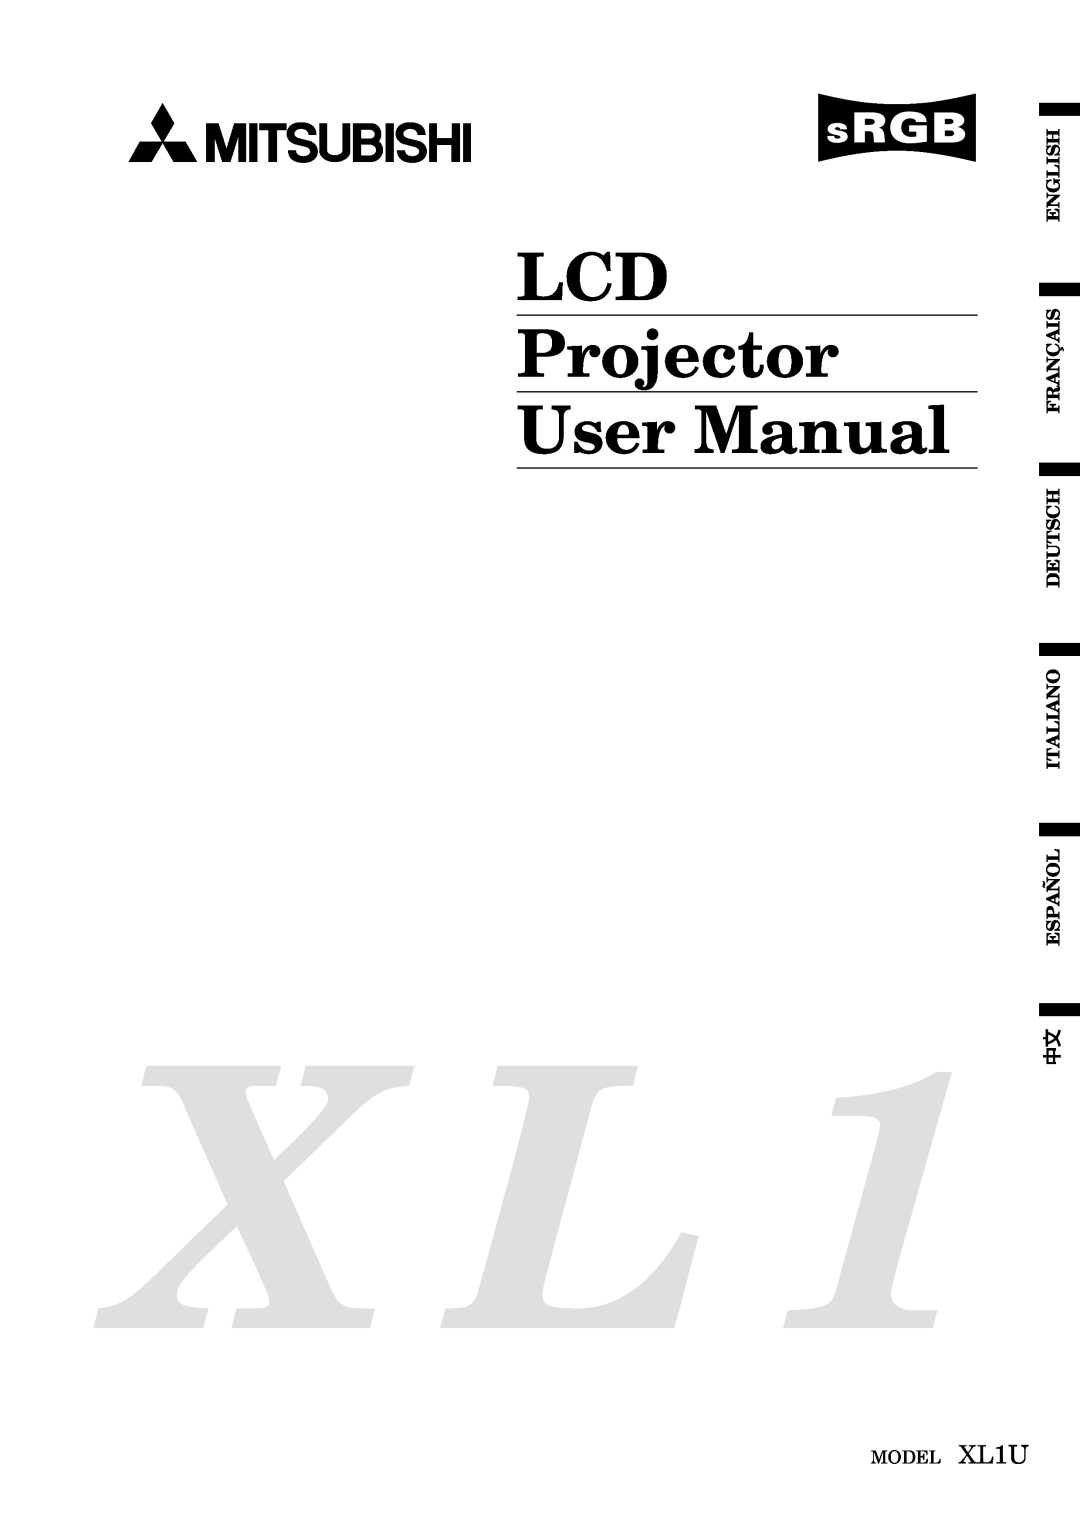 Mitsubishi Electronics XL1U user manual LCD Projector User Manual, English Français Deutsch Italiano Español 